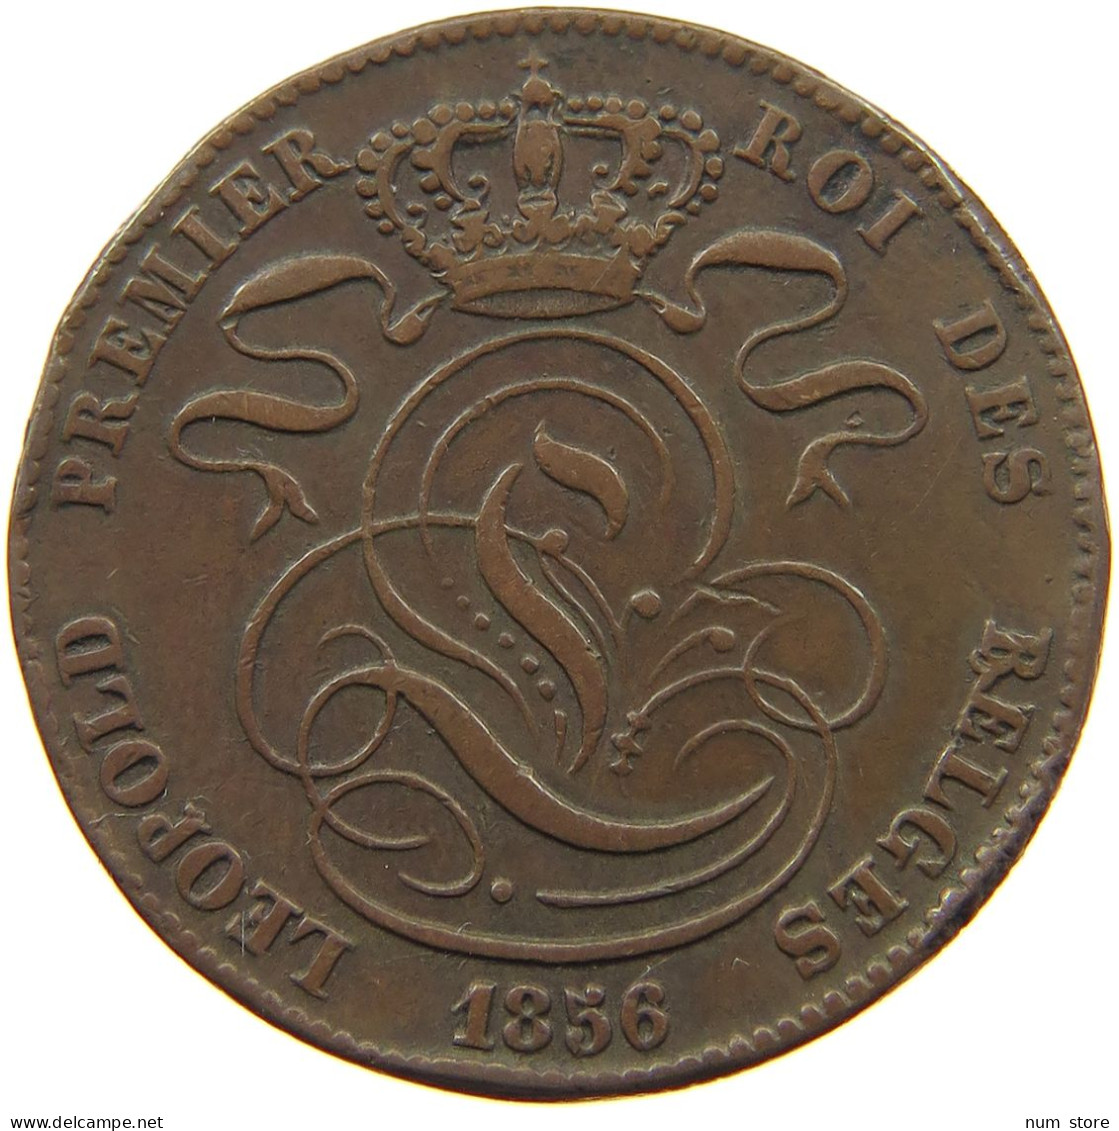 BELGIUM 5 CENTIMES 1856  #t132 0625 - 5 Cents